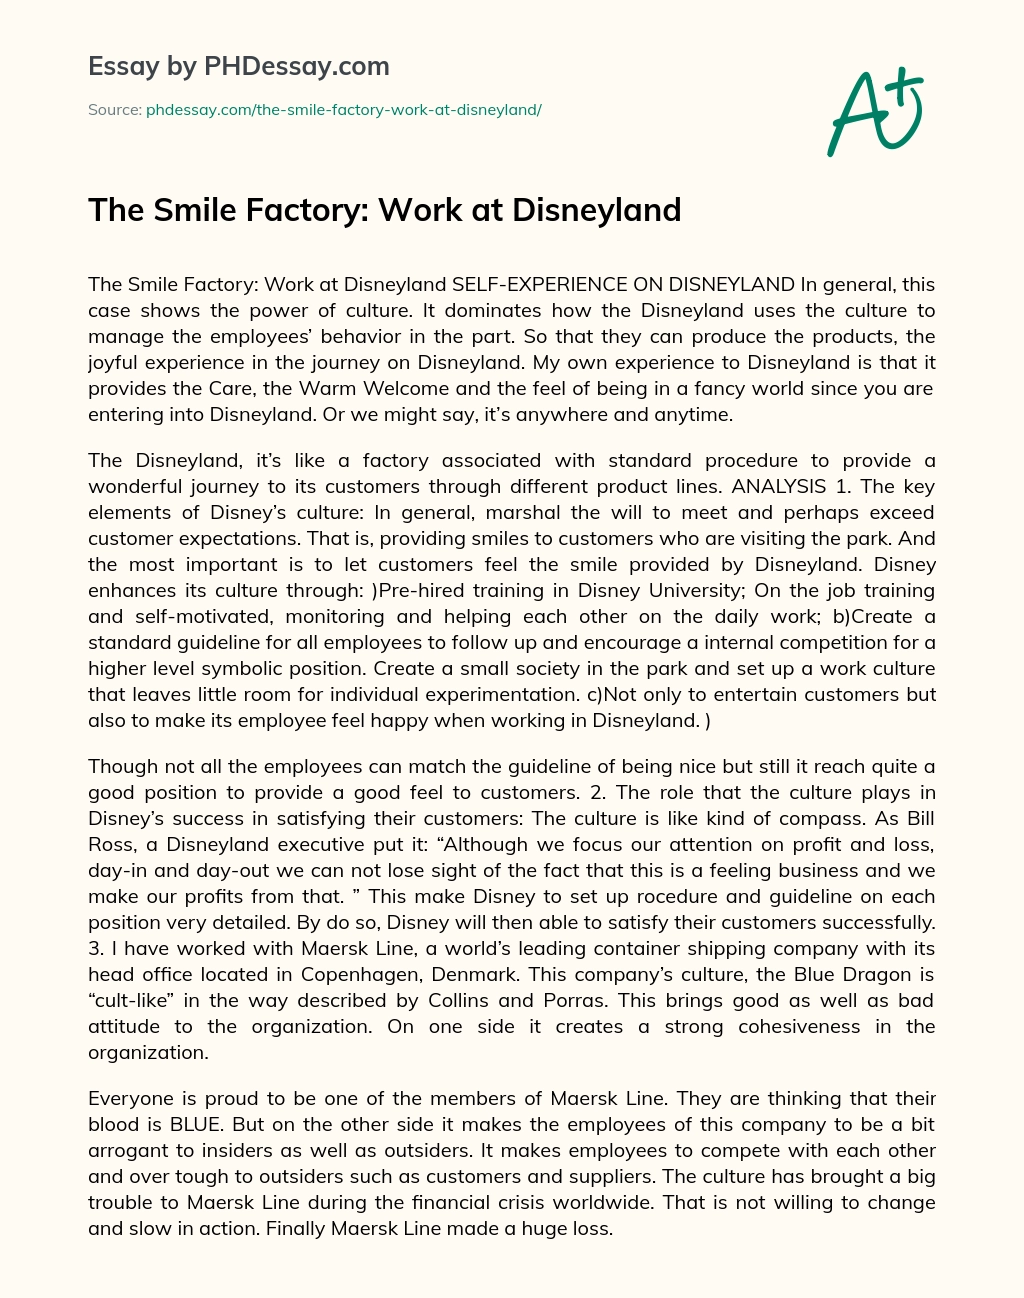 The Smile Factory: Work at Disneyland essay